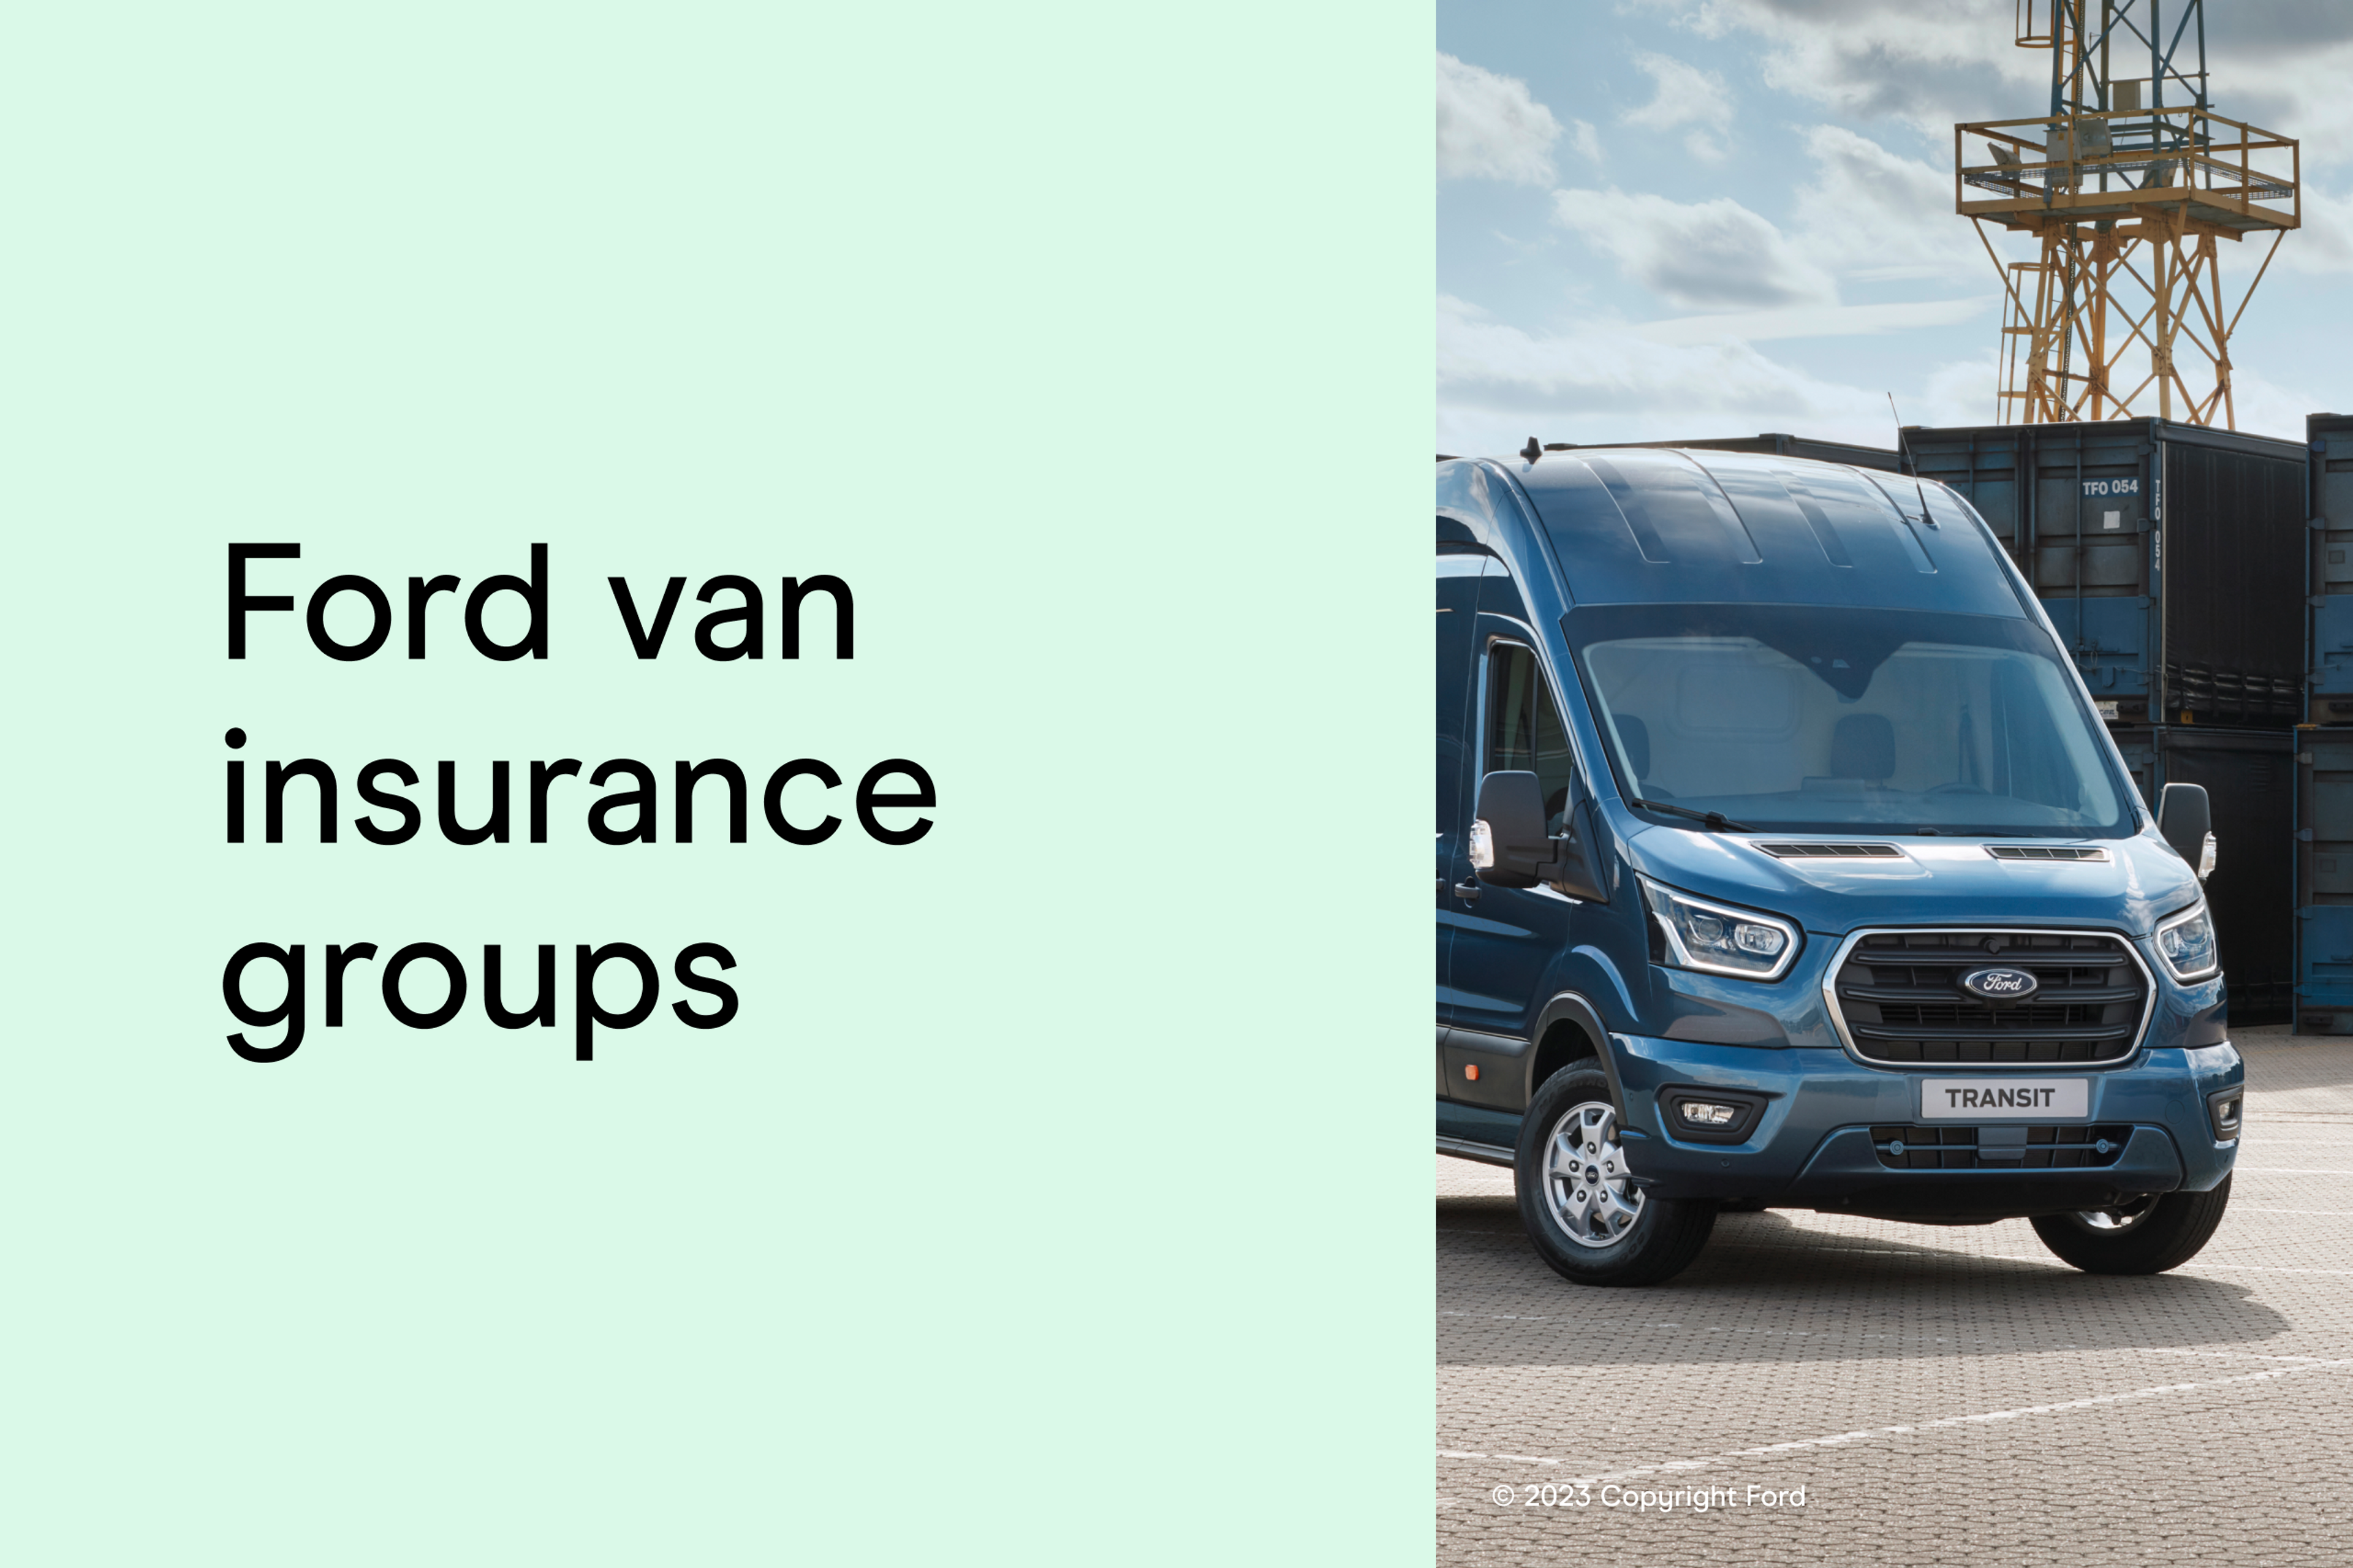 Ford van insurance groups